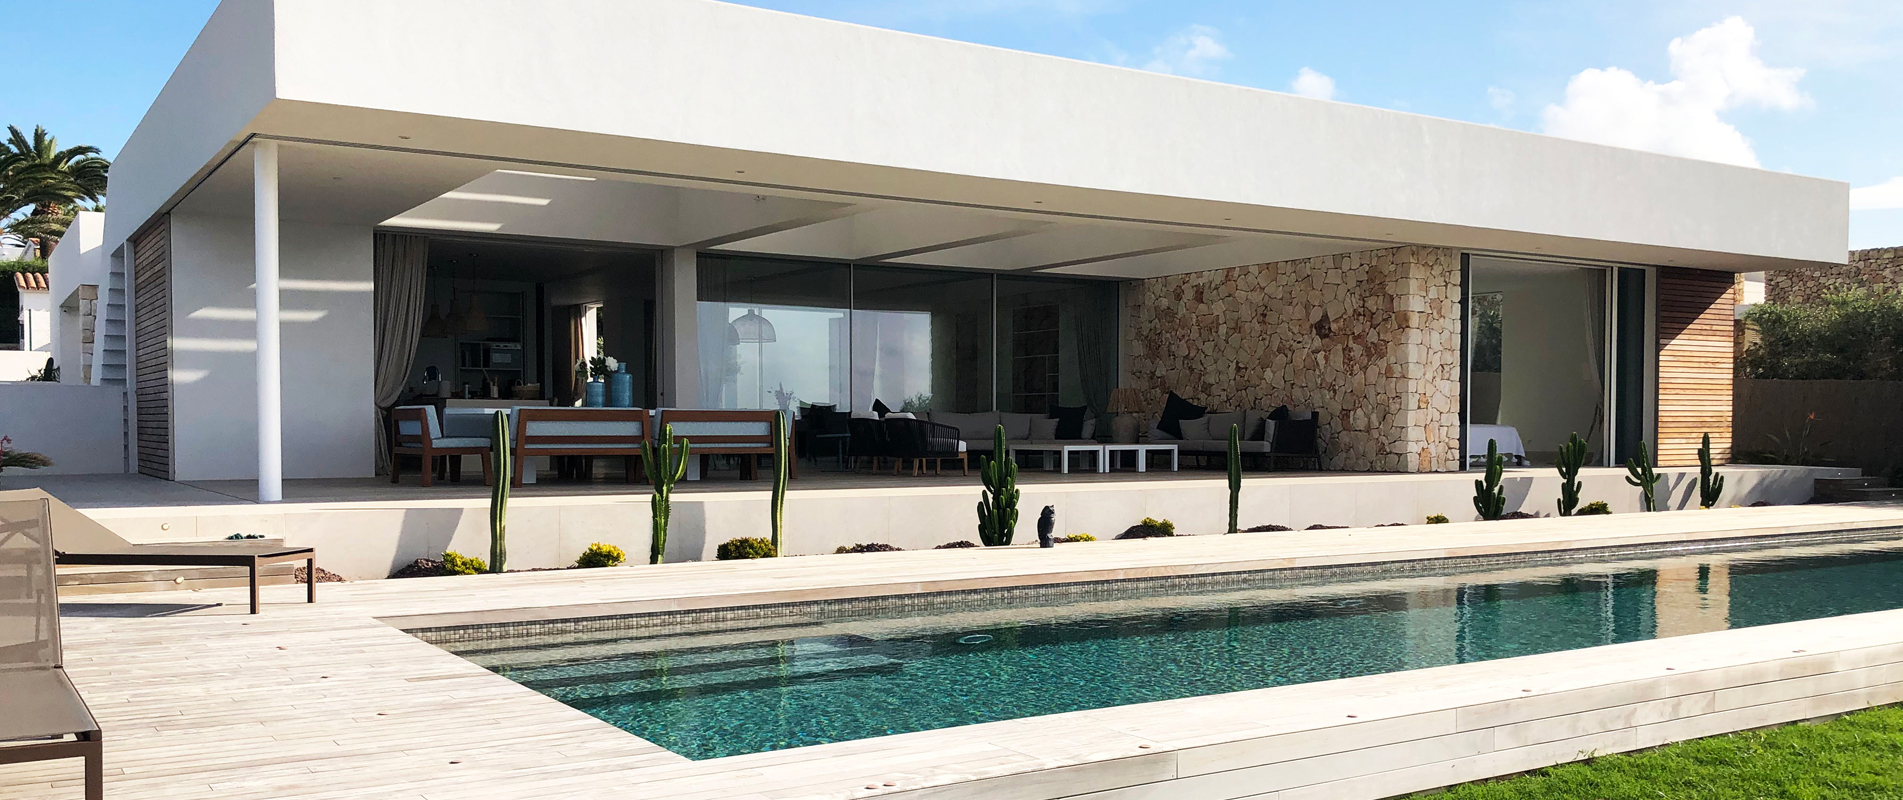 Luxury villa holidays Menorca